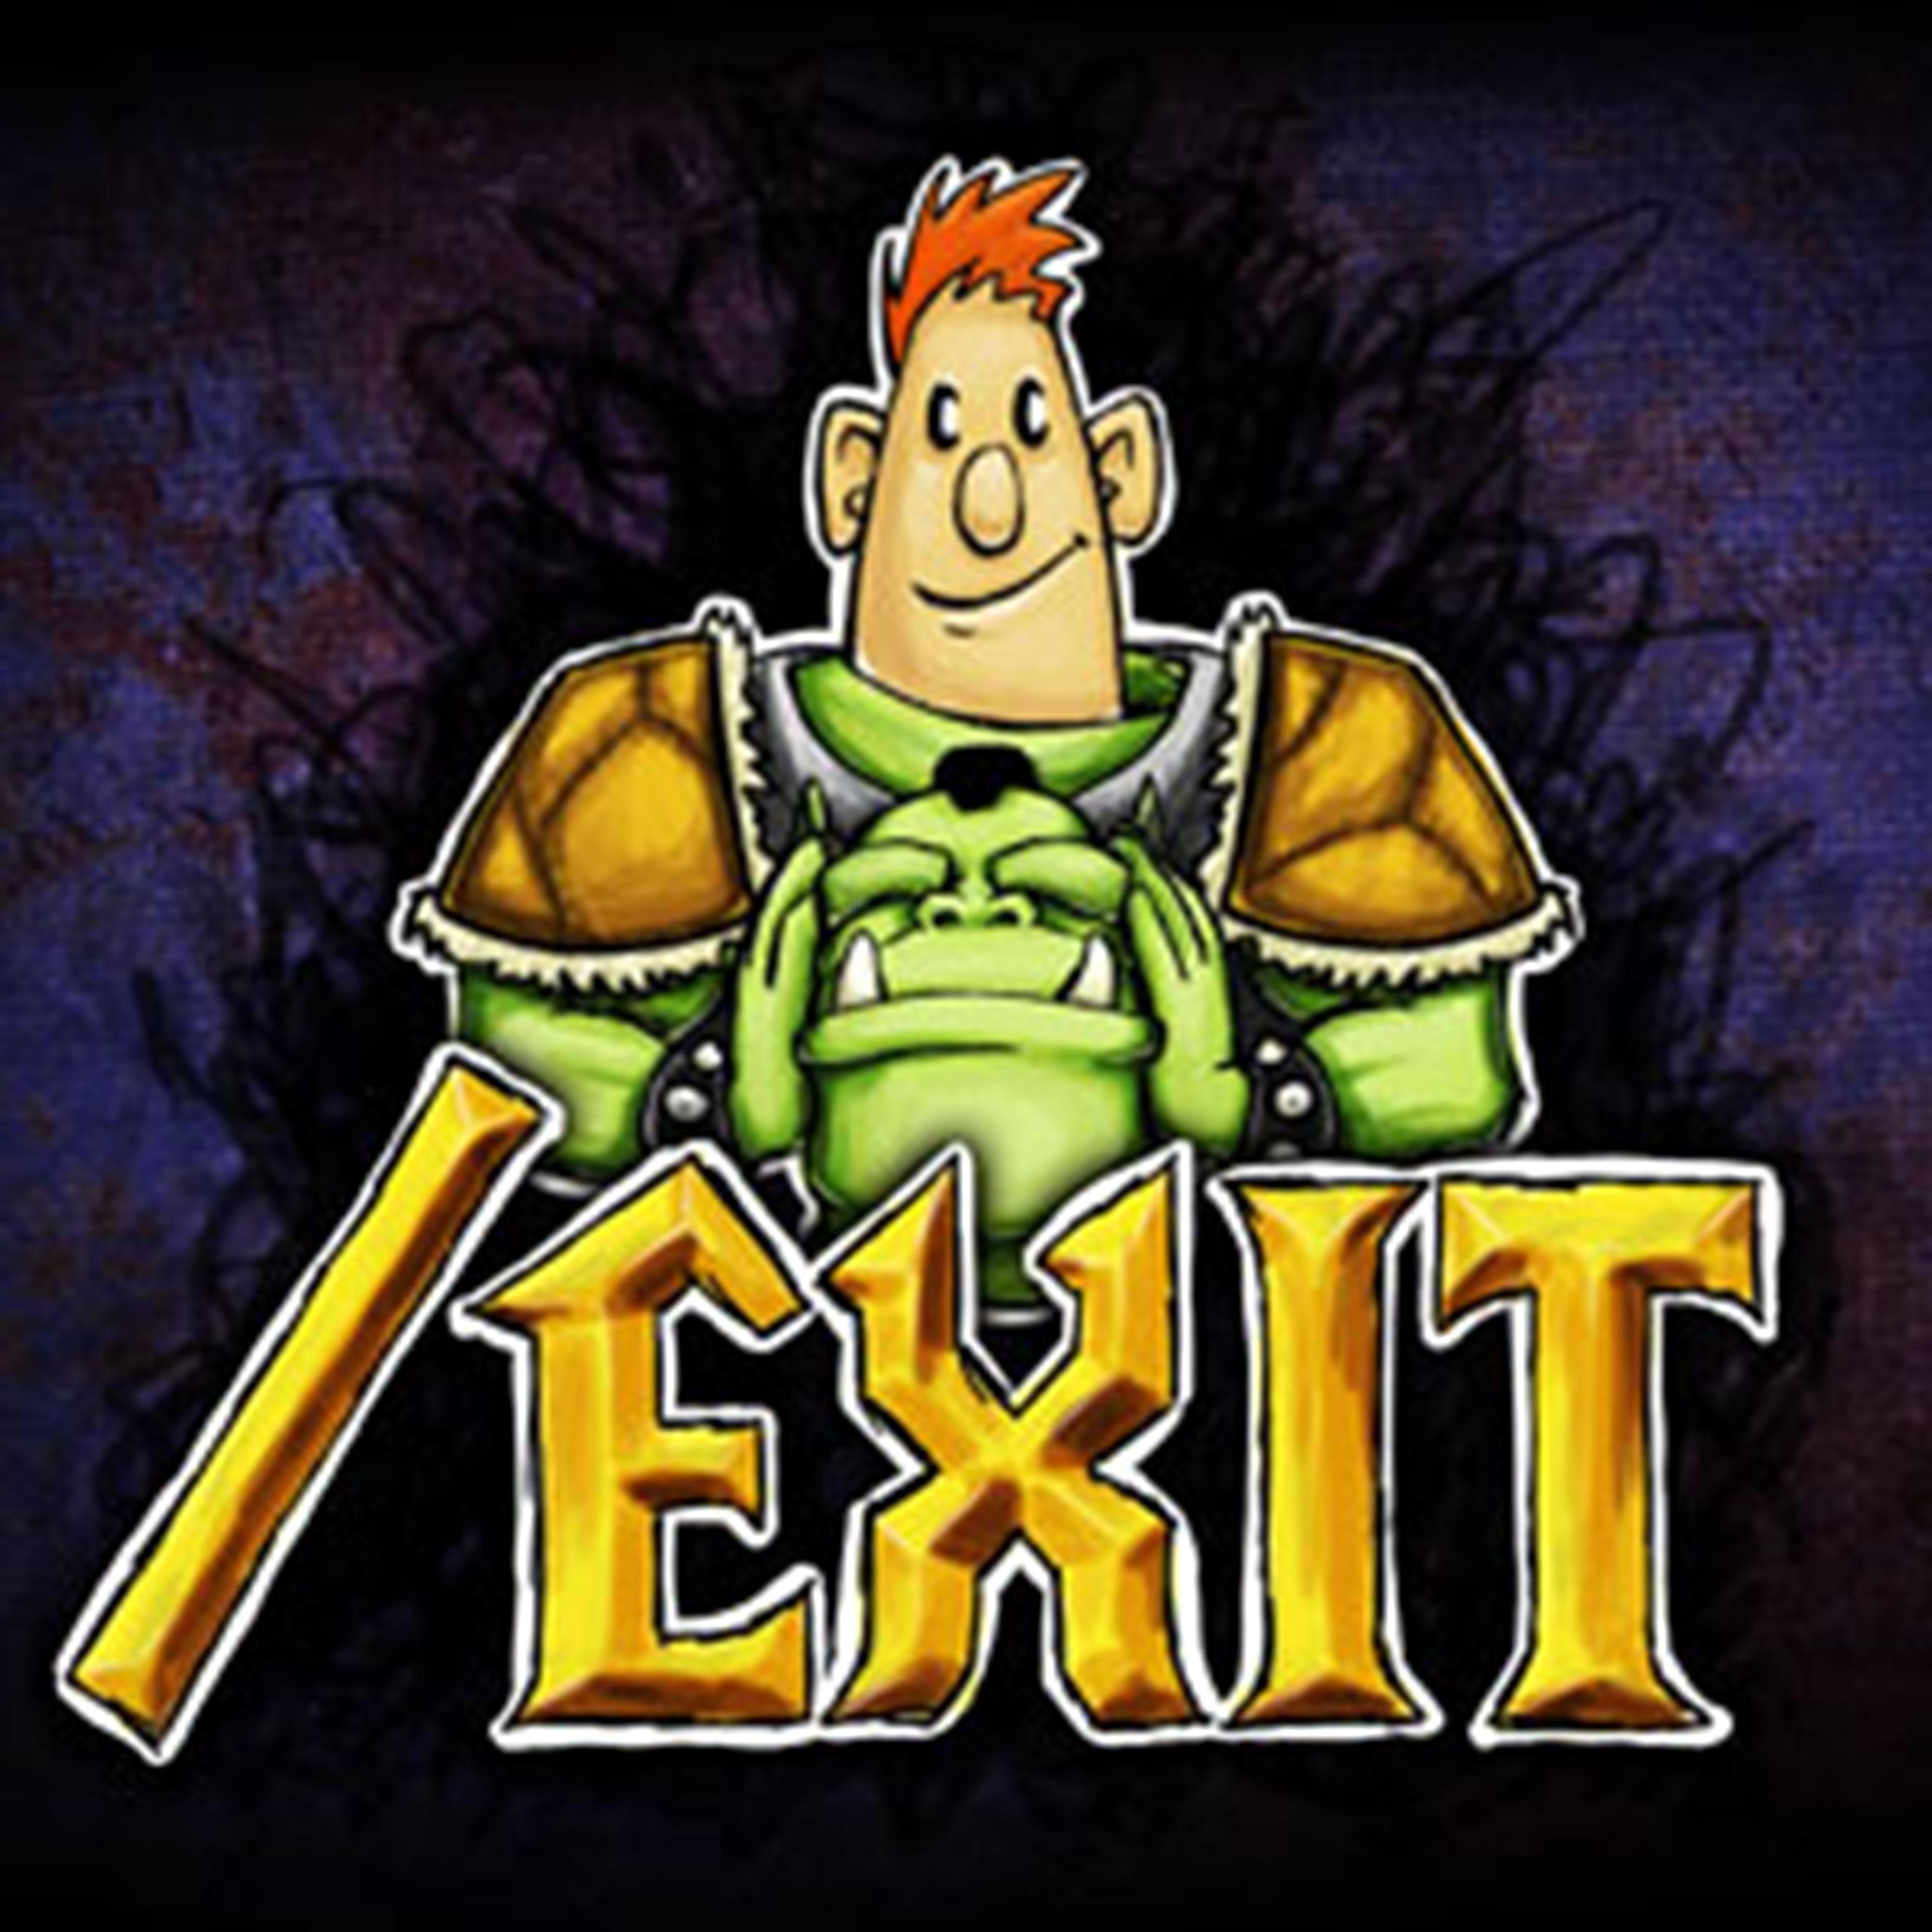 /Exit